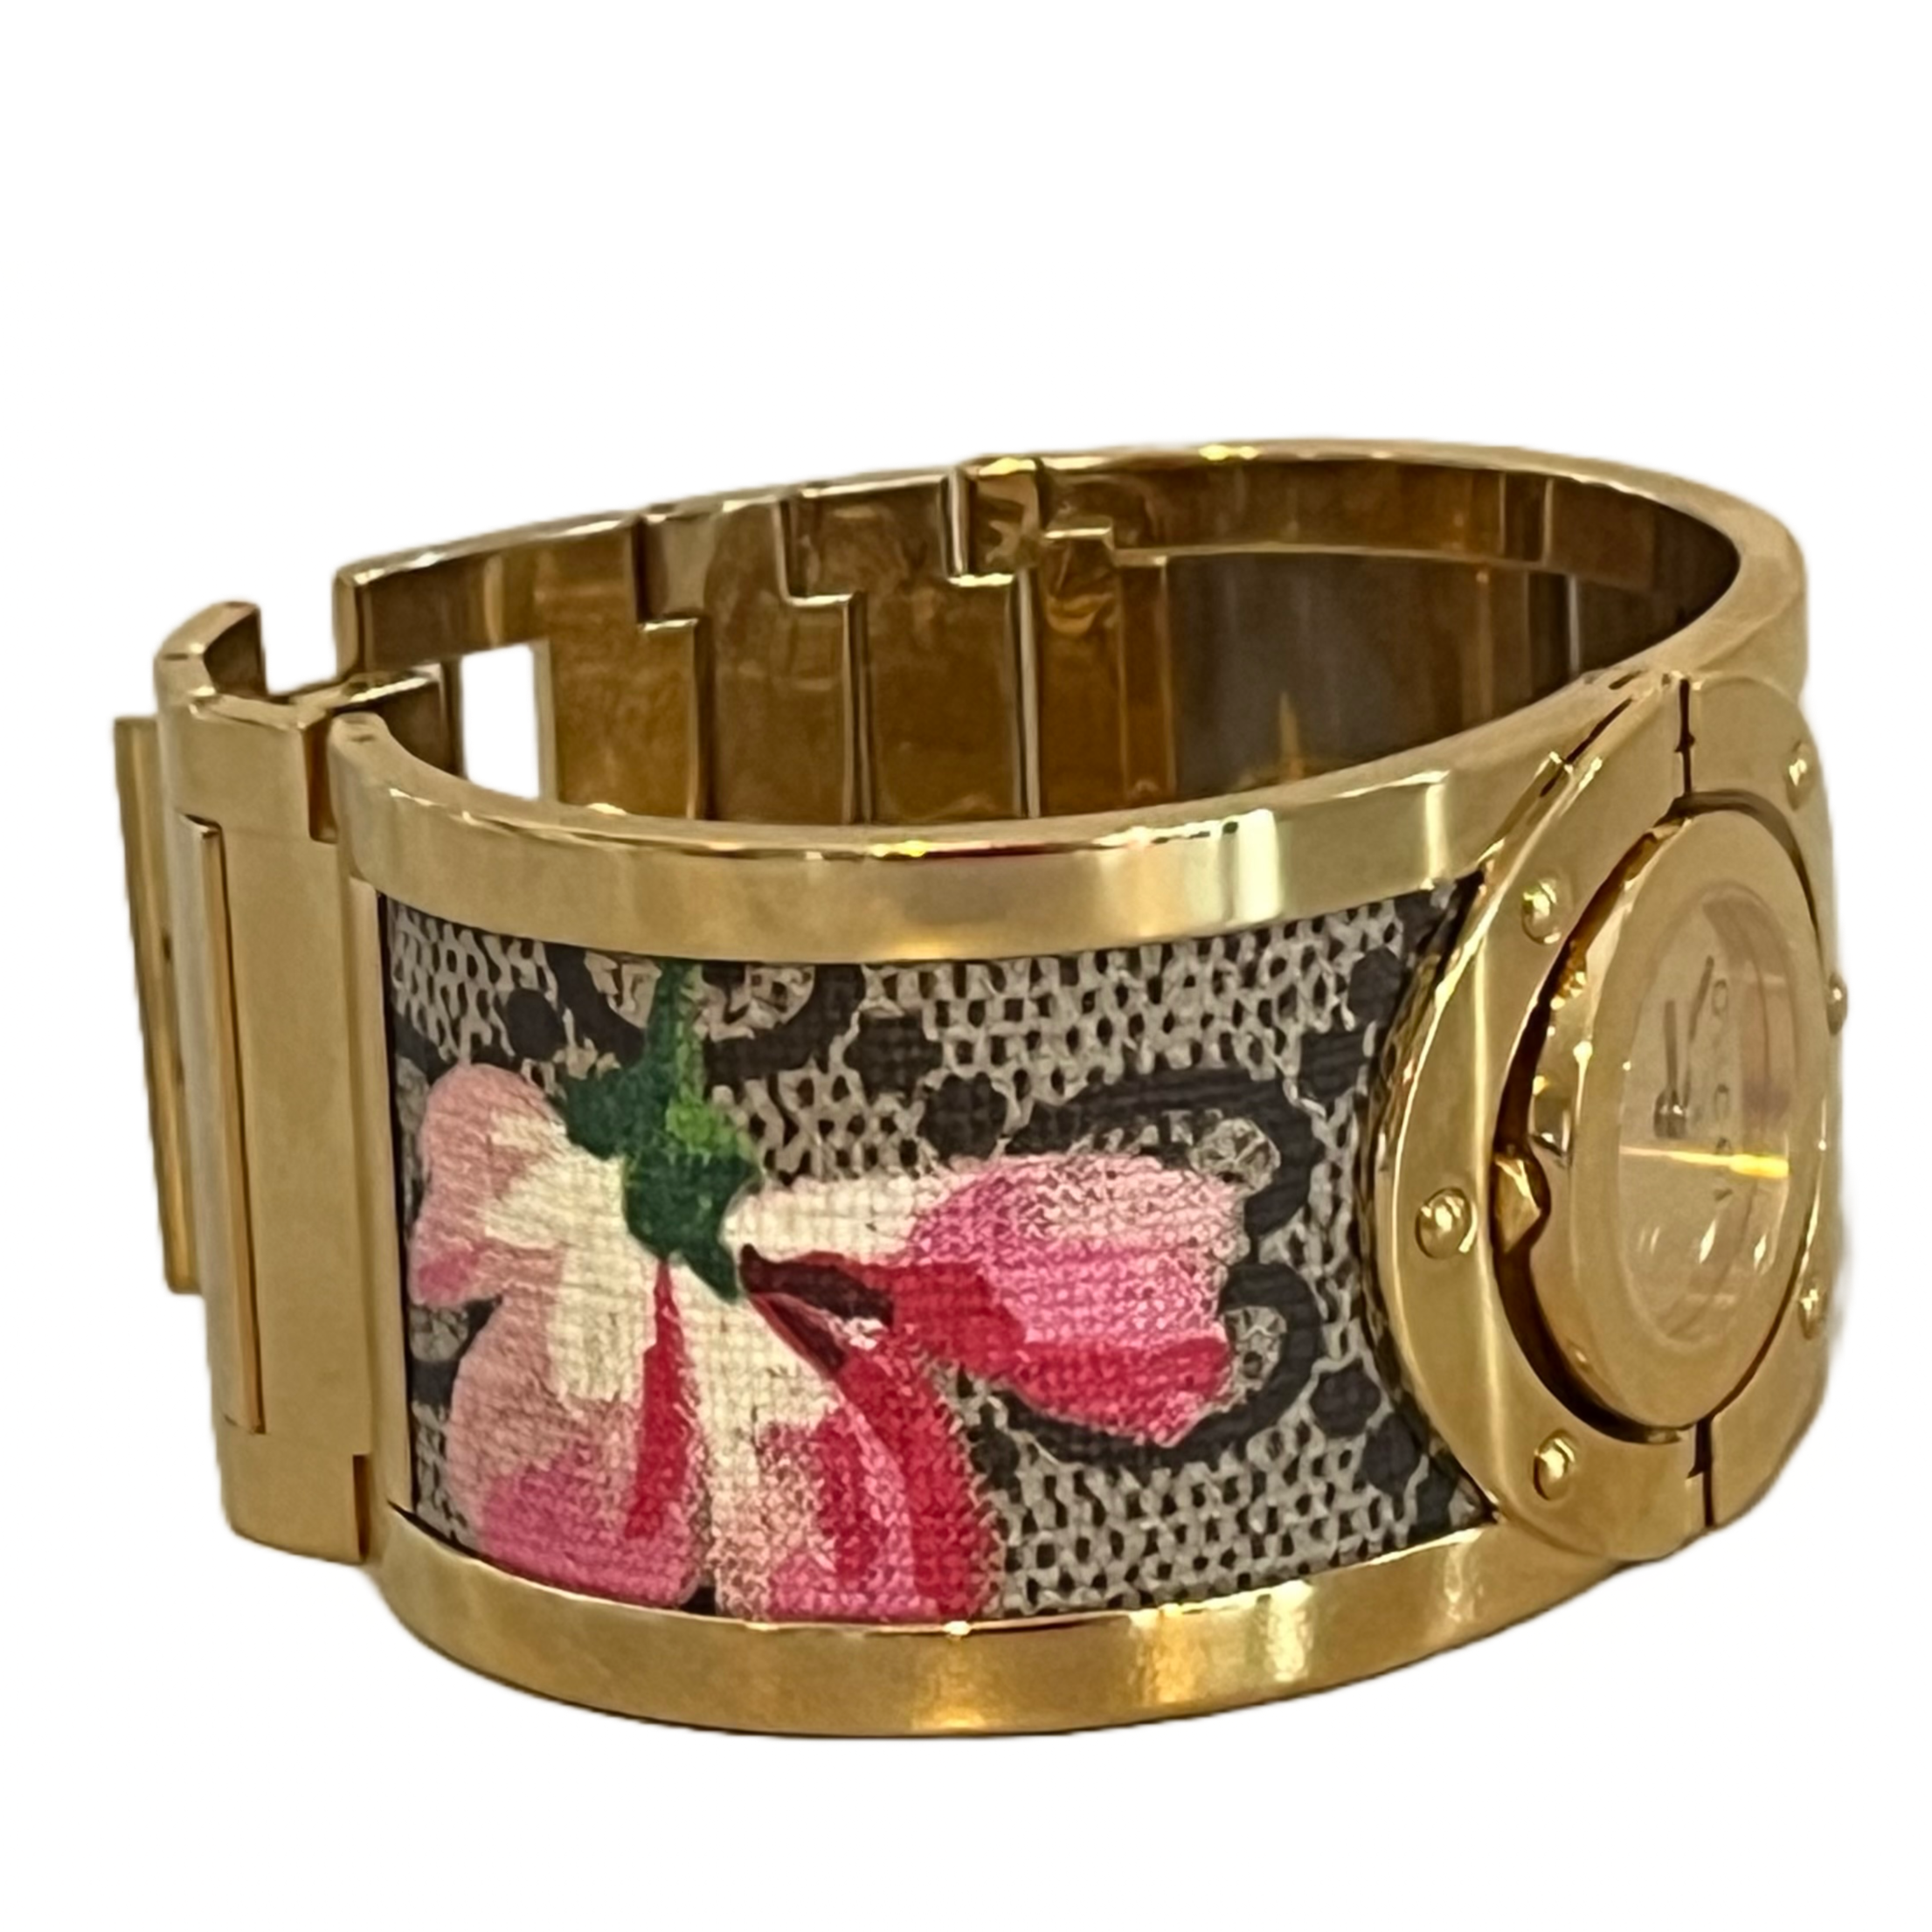 Gucci Grip Gold-Tone Stainless Steel Bracelet 35mm Unisex Watch YA157403  NWT | eBay